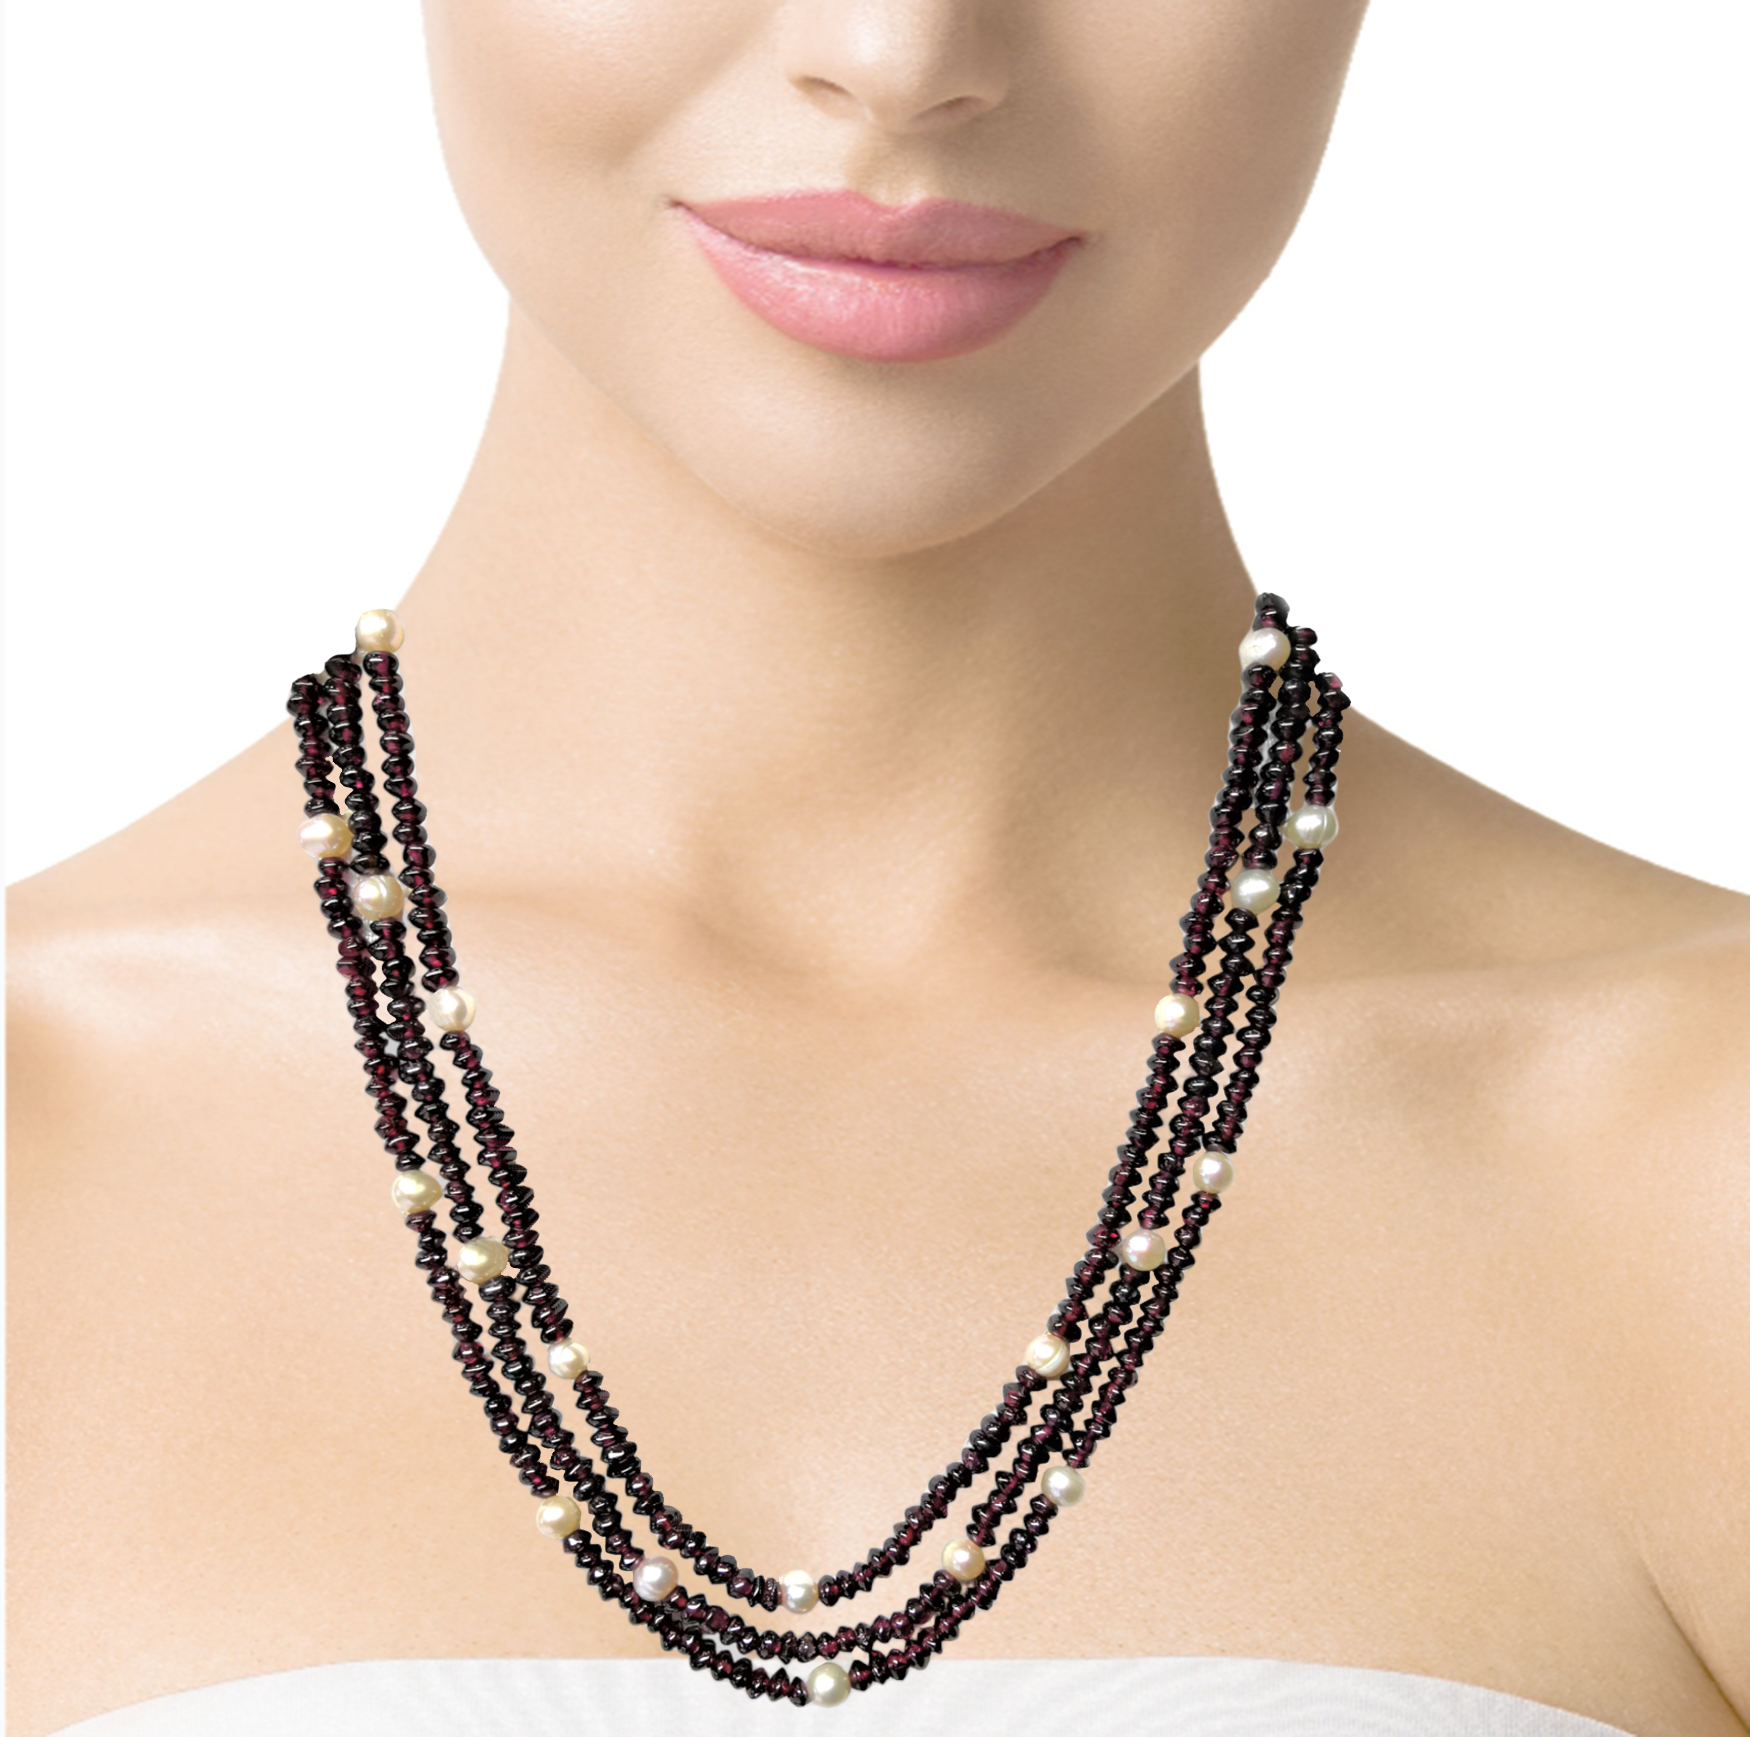 Natural Handmade Necklace 16"-18" Garnet with Pearls Gemstone Beads Jewellery